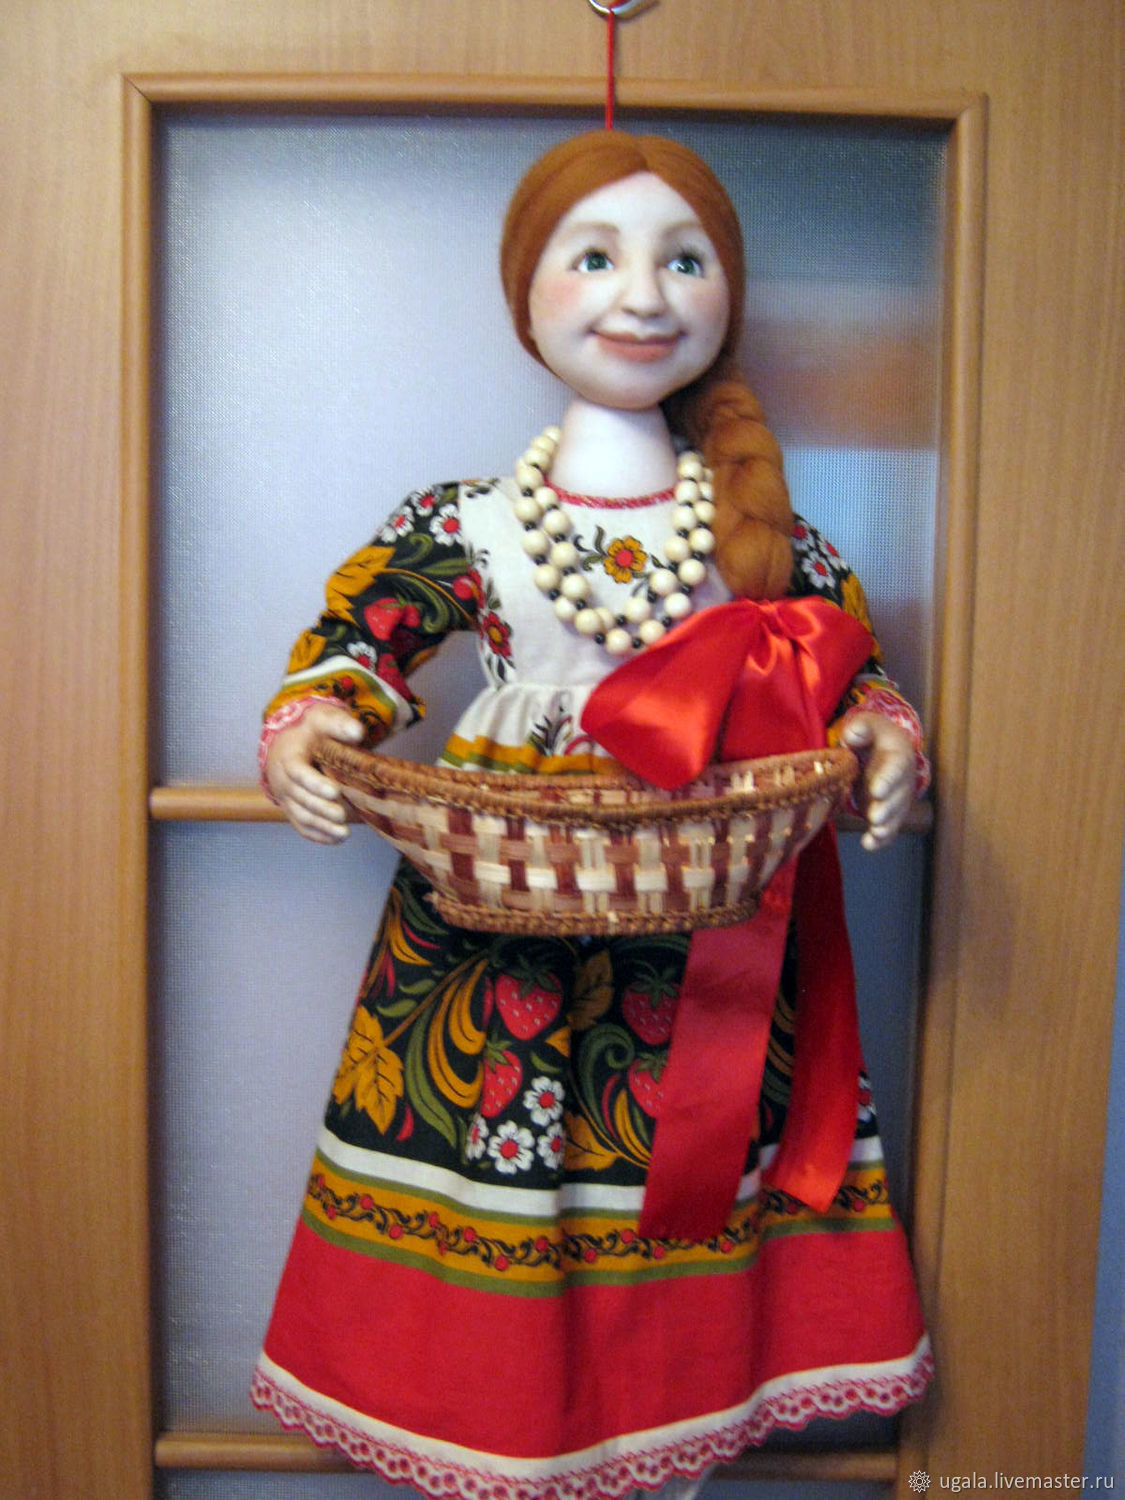 Doll-packetize she, Pockets, Ryazan,  Фото №1